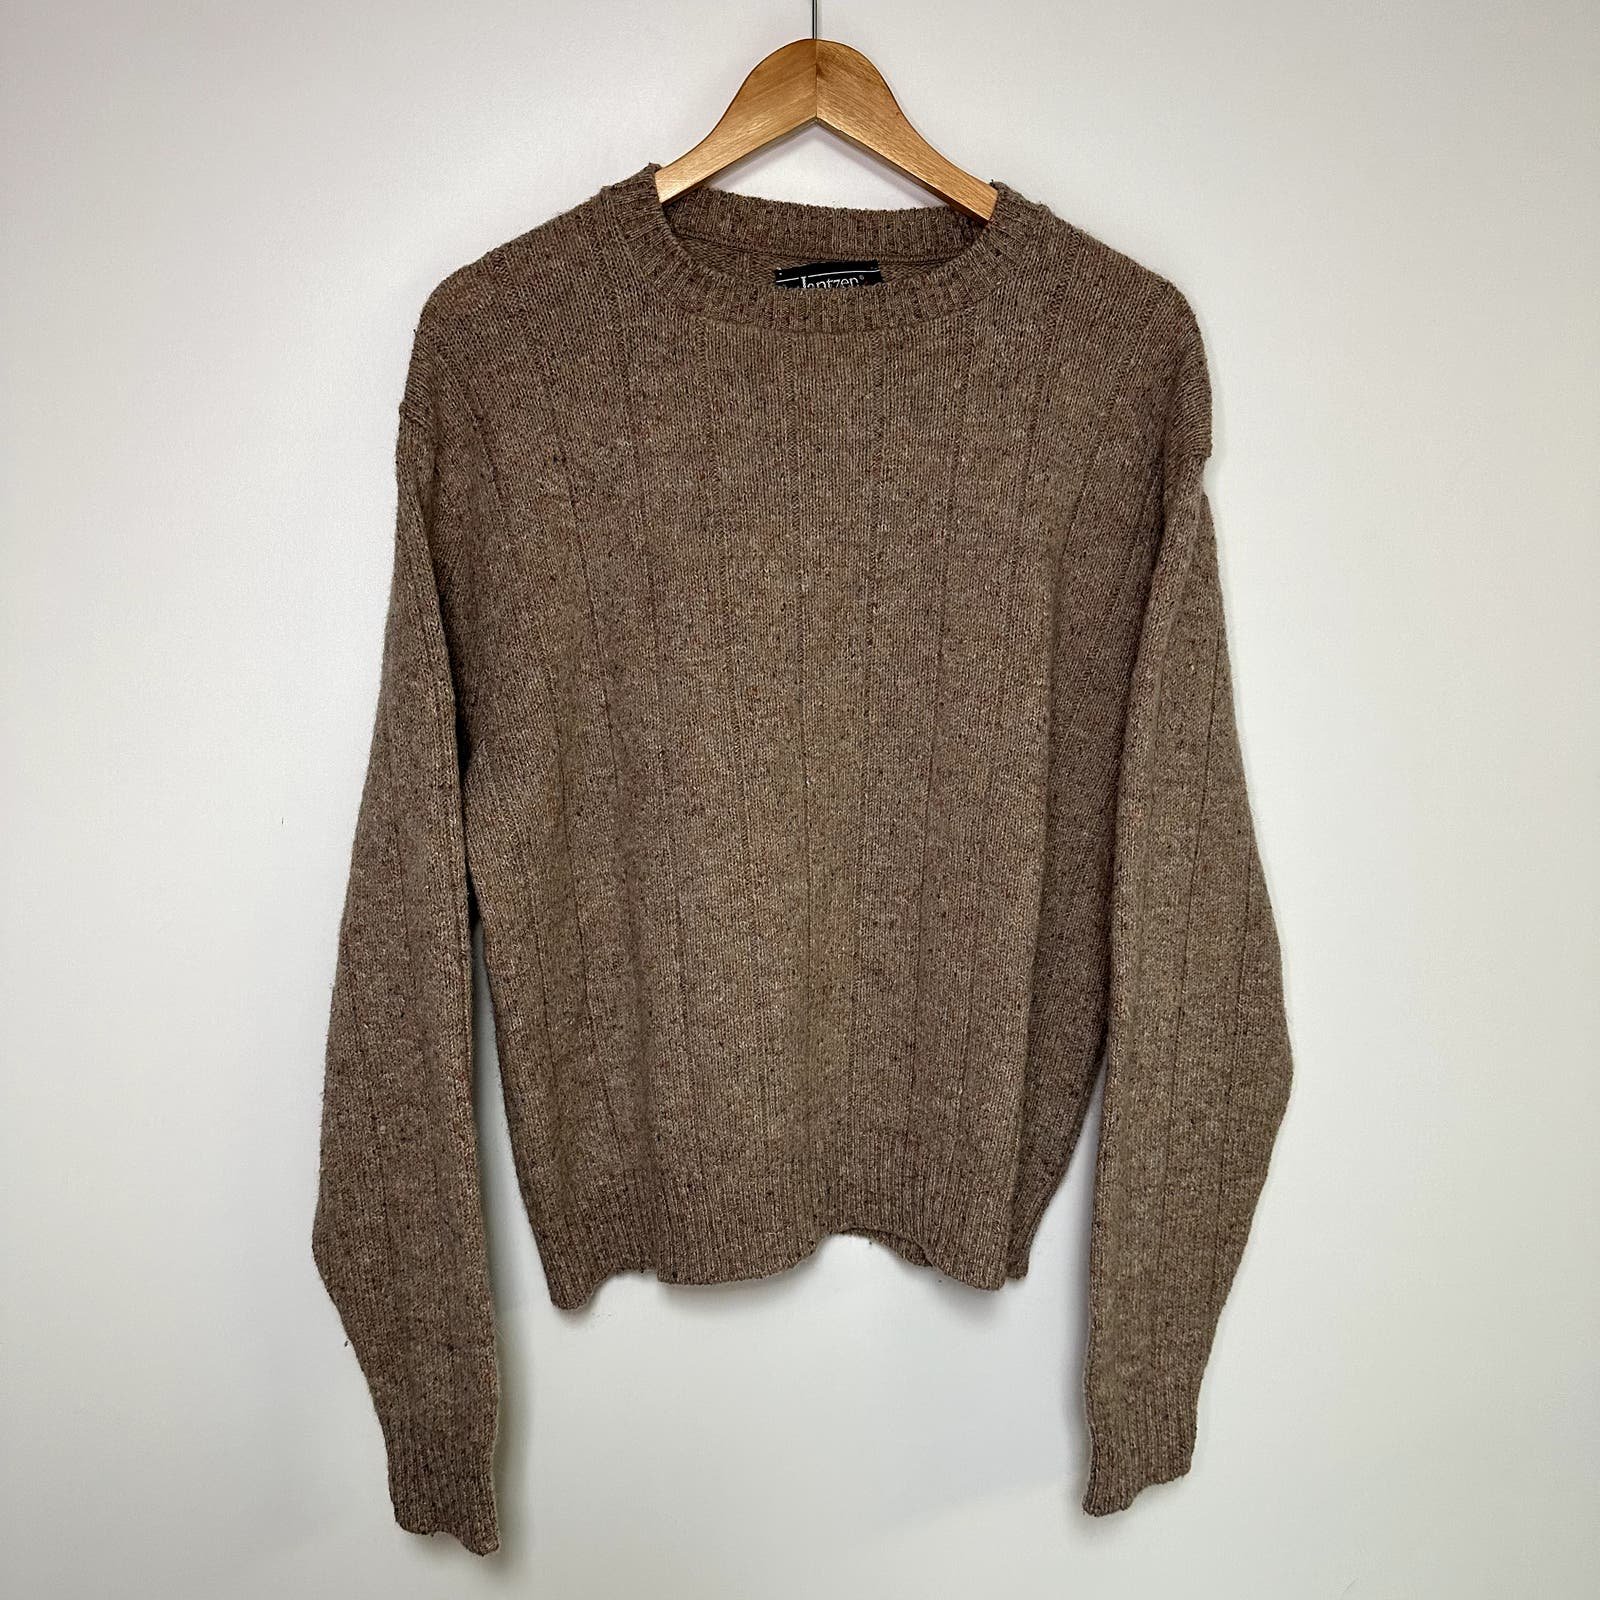 Simple 90 Vintage Knit Sweater Jantzen Made in USA Light Pink-Gray PbHSdIFKZ Store Online